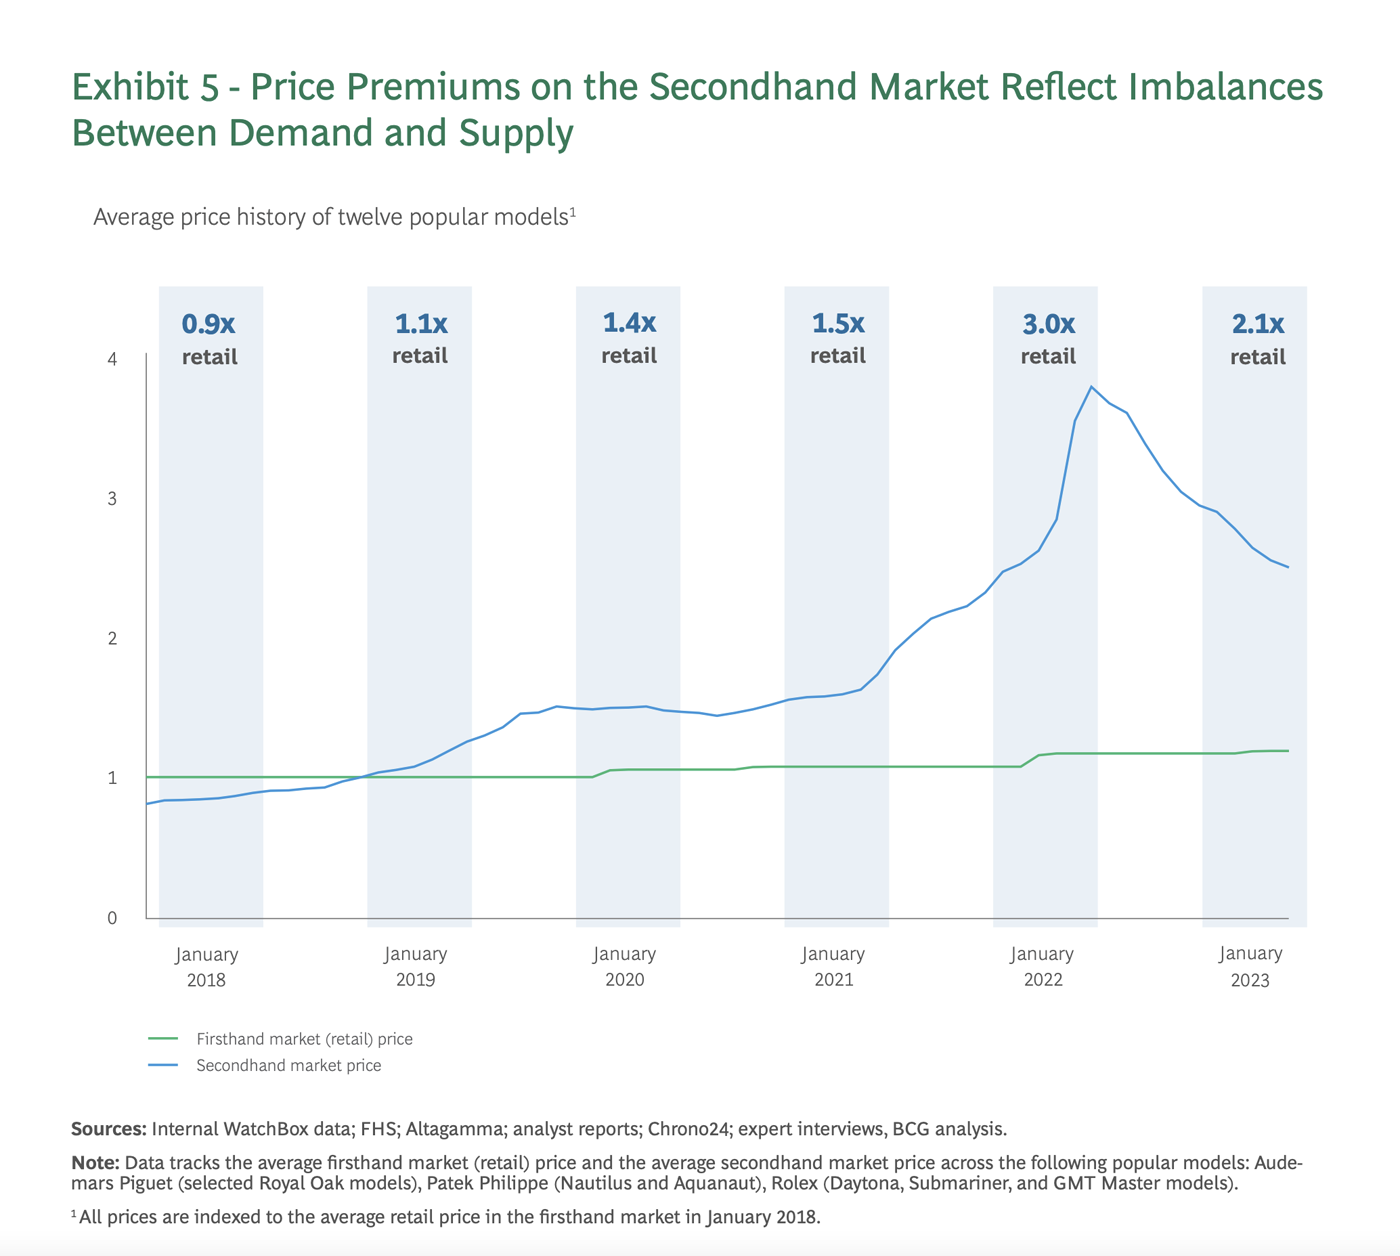 Price Premiums on Second Hand Market vs. Retail